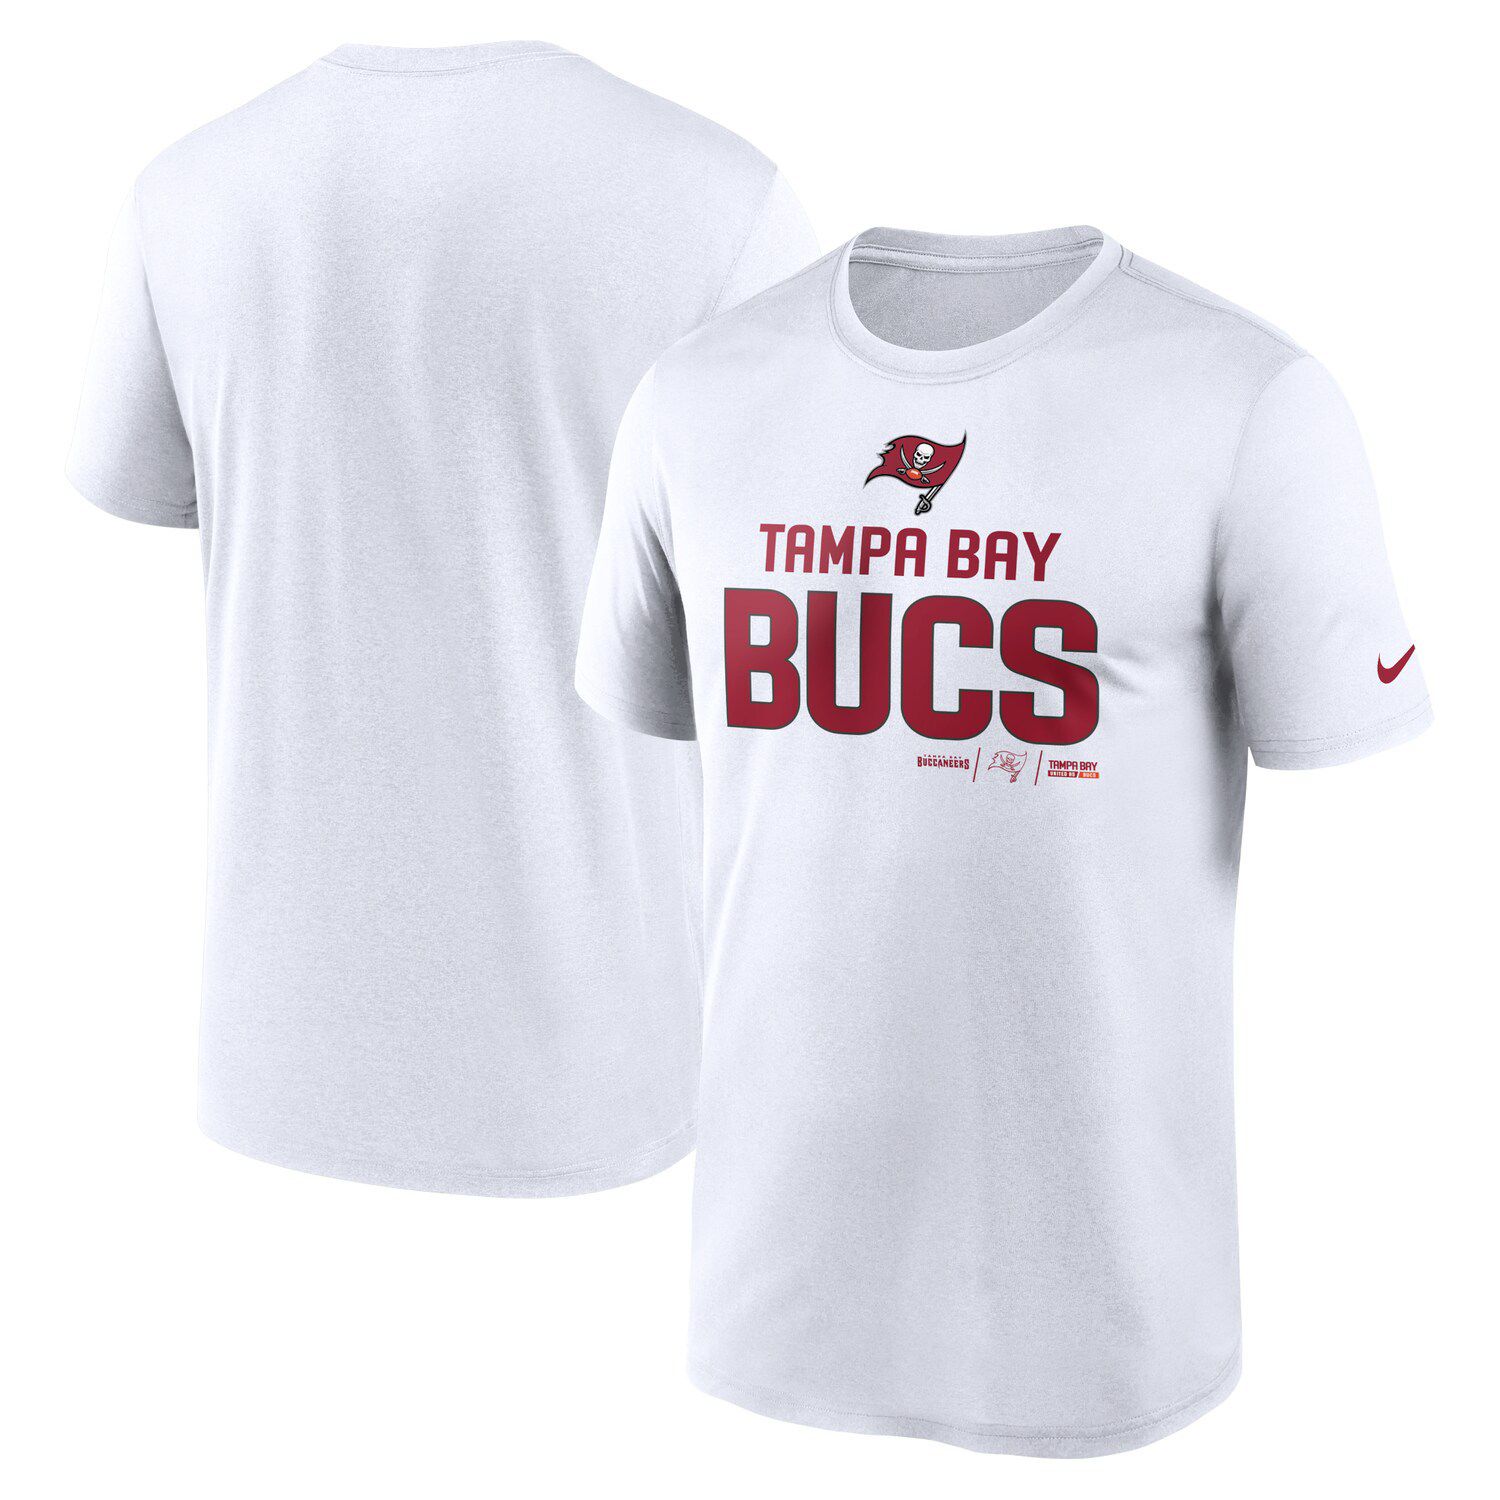 Tampa Bay Buccaneers Performance Shirt